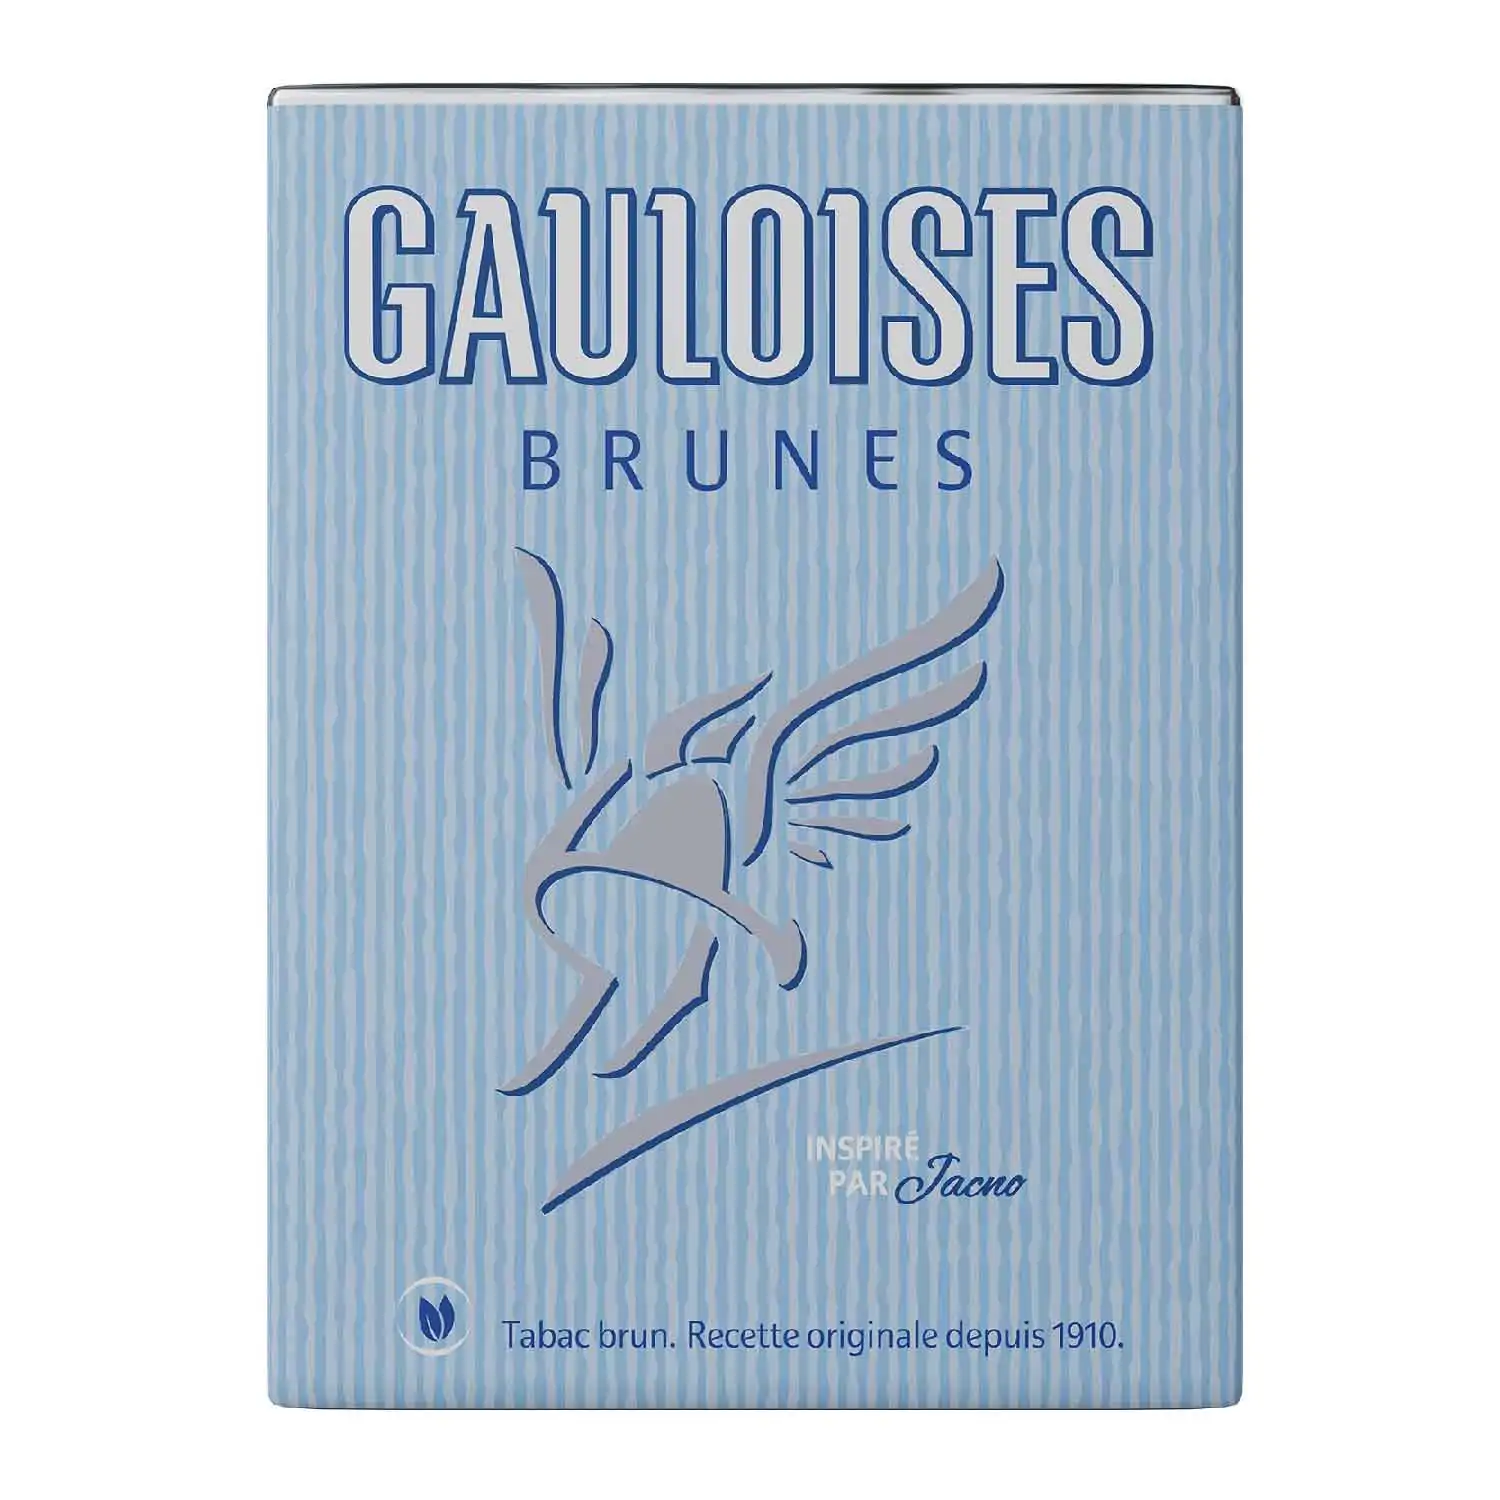 Gauloises brunes 20 - Buy at Real Tobacco